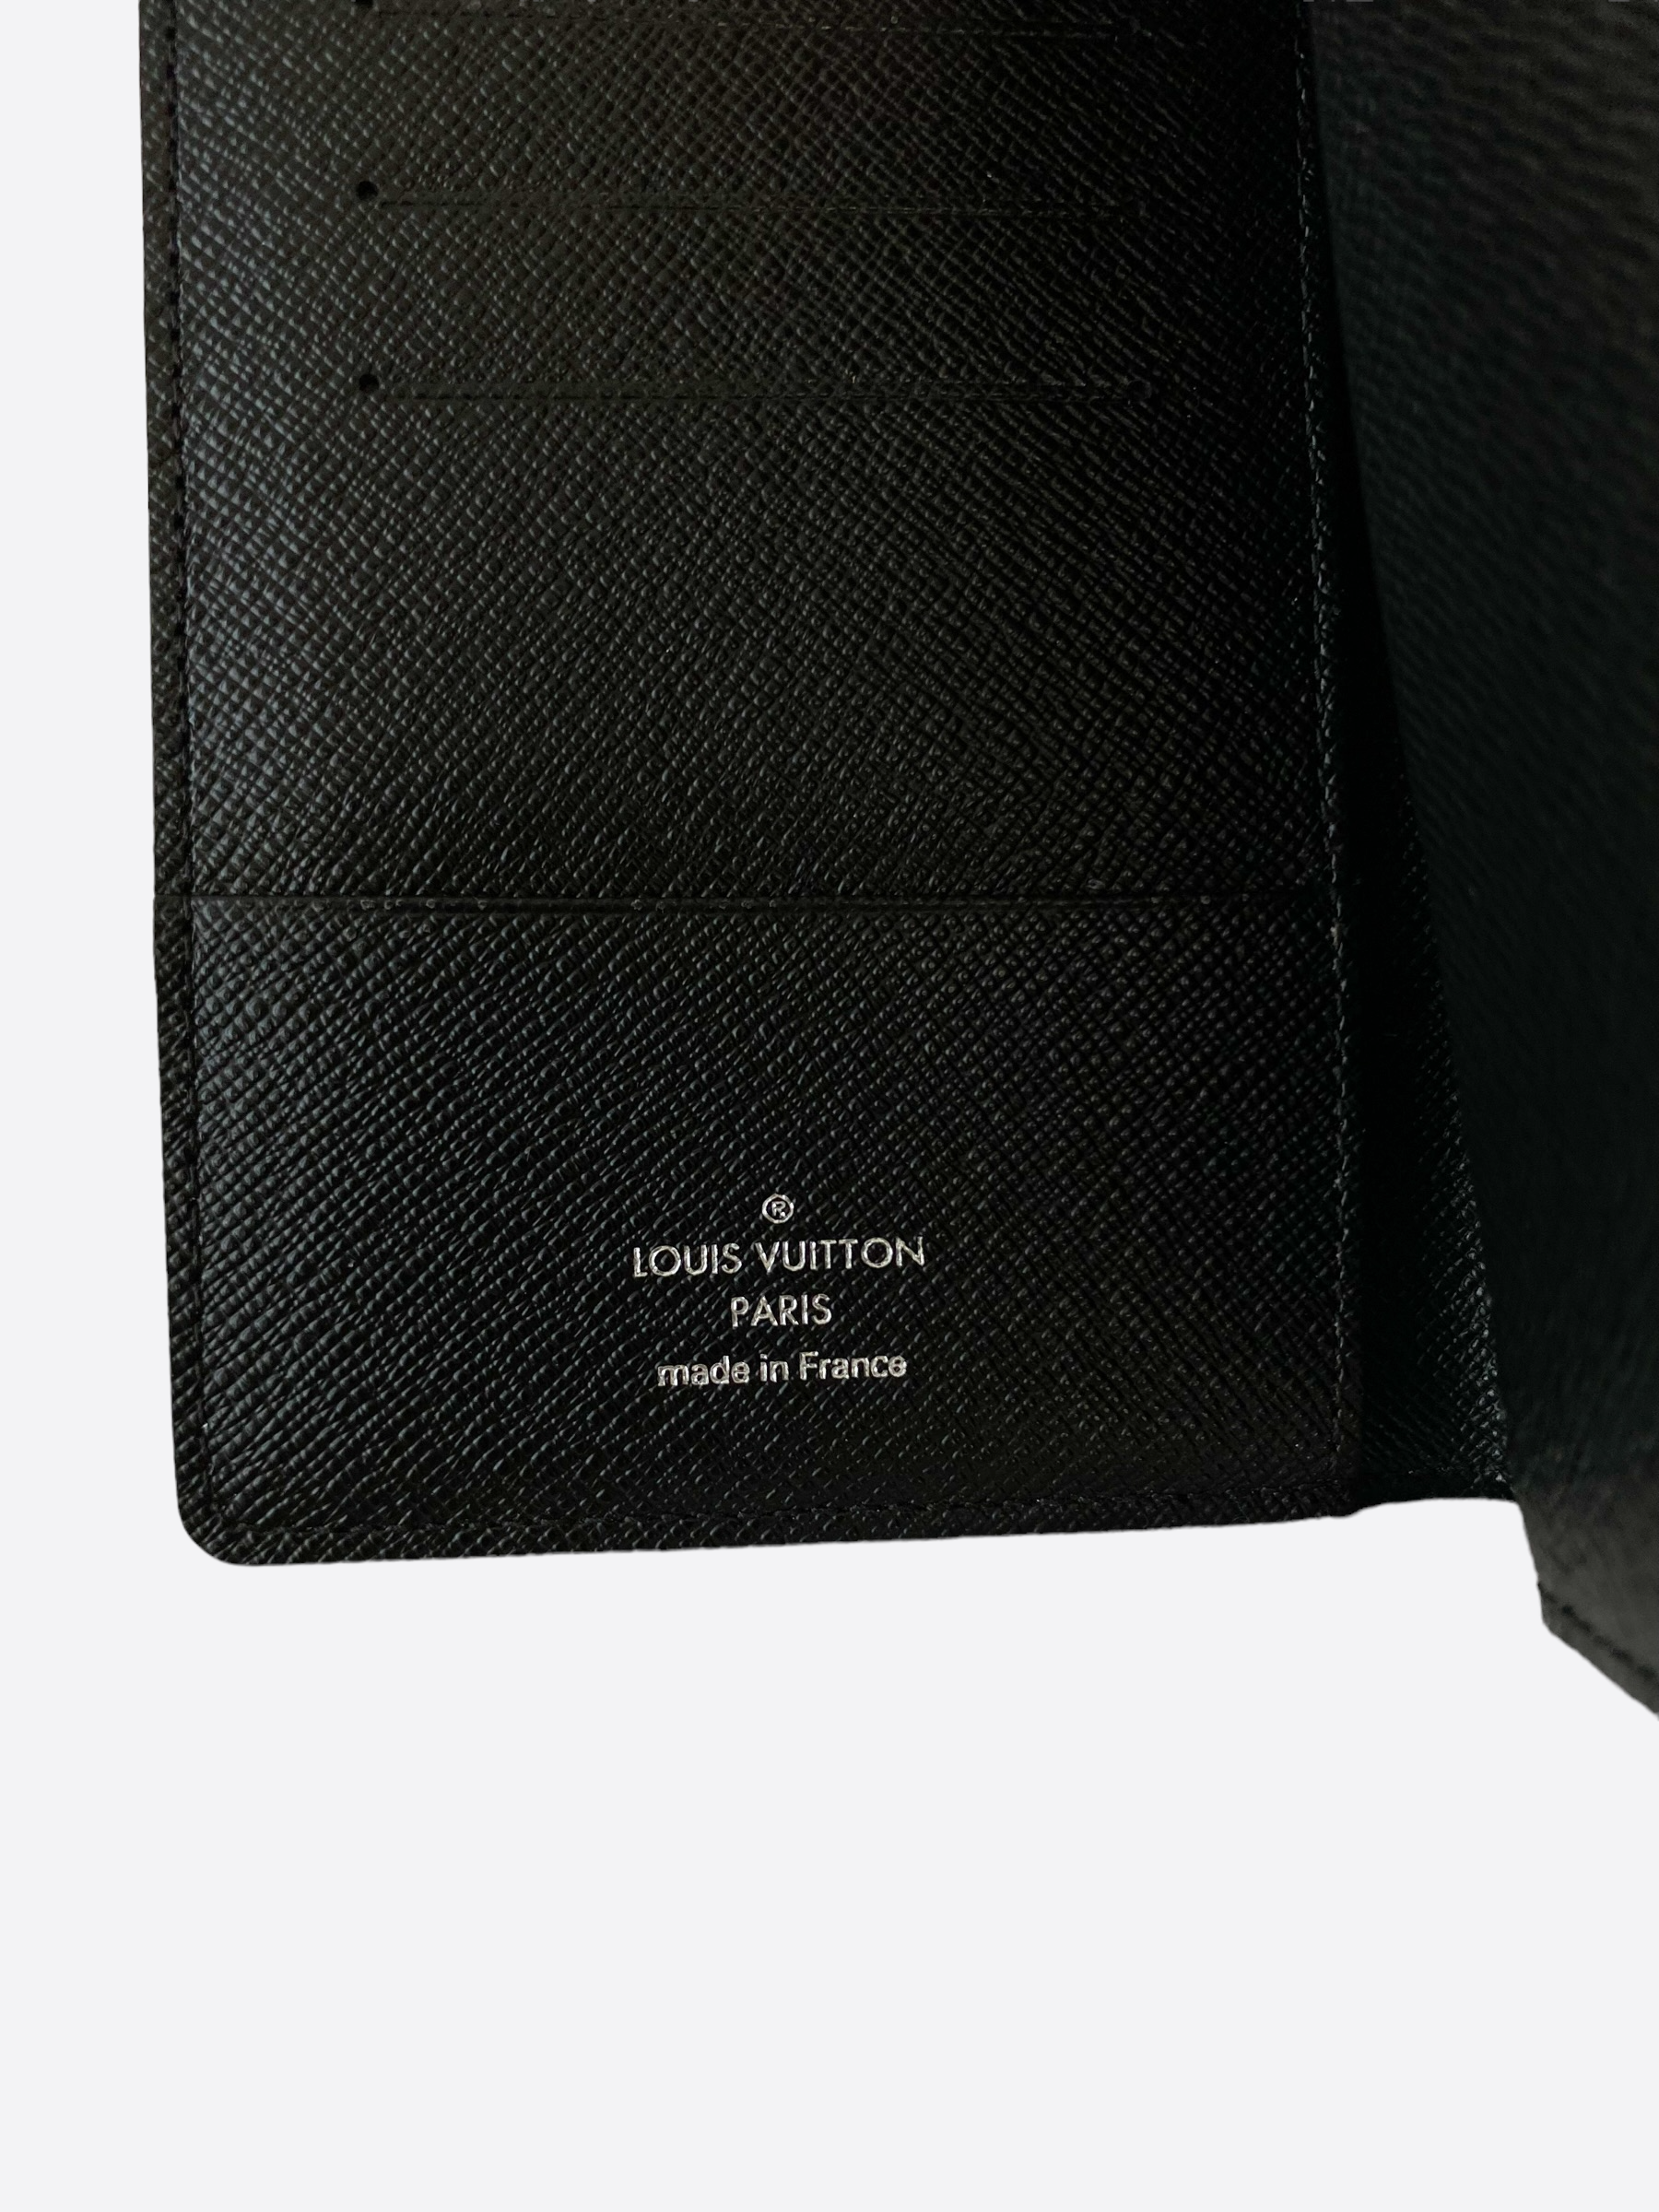 LOUIS VUITTON Damier Ebene Checkbook Cover Card Holder Wallet